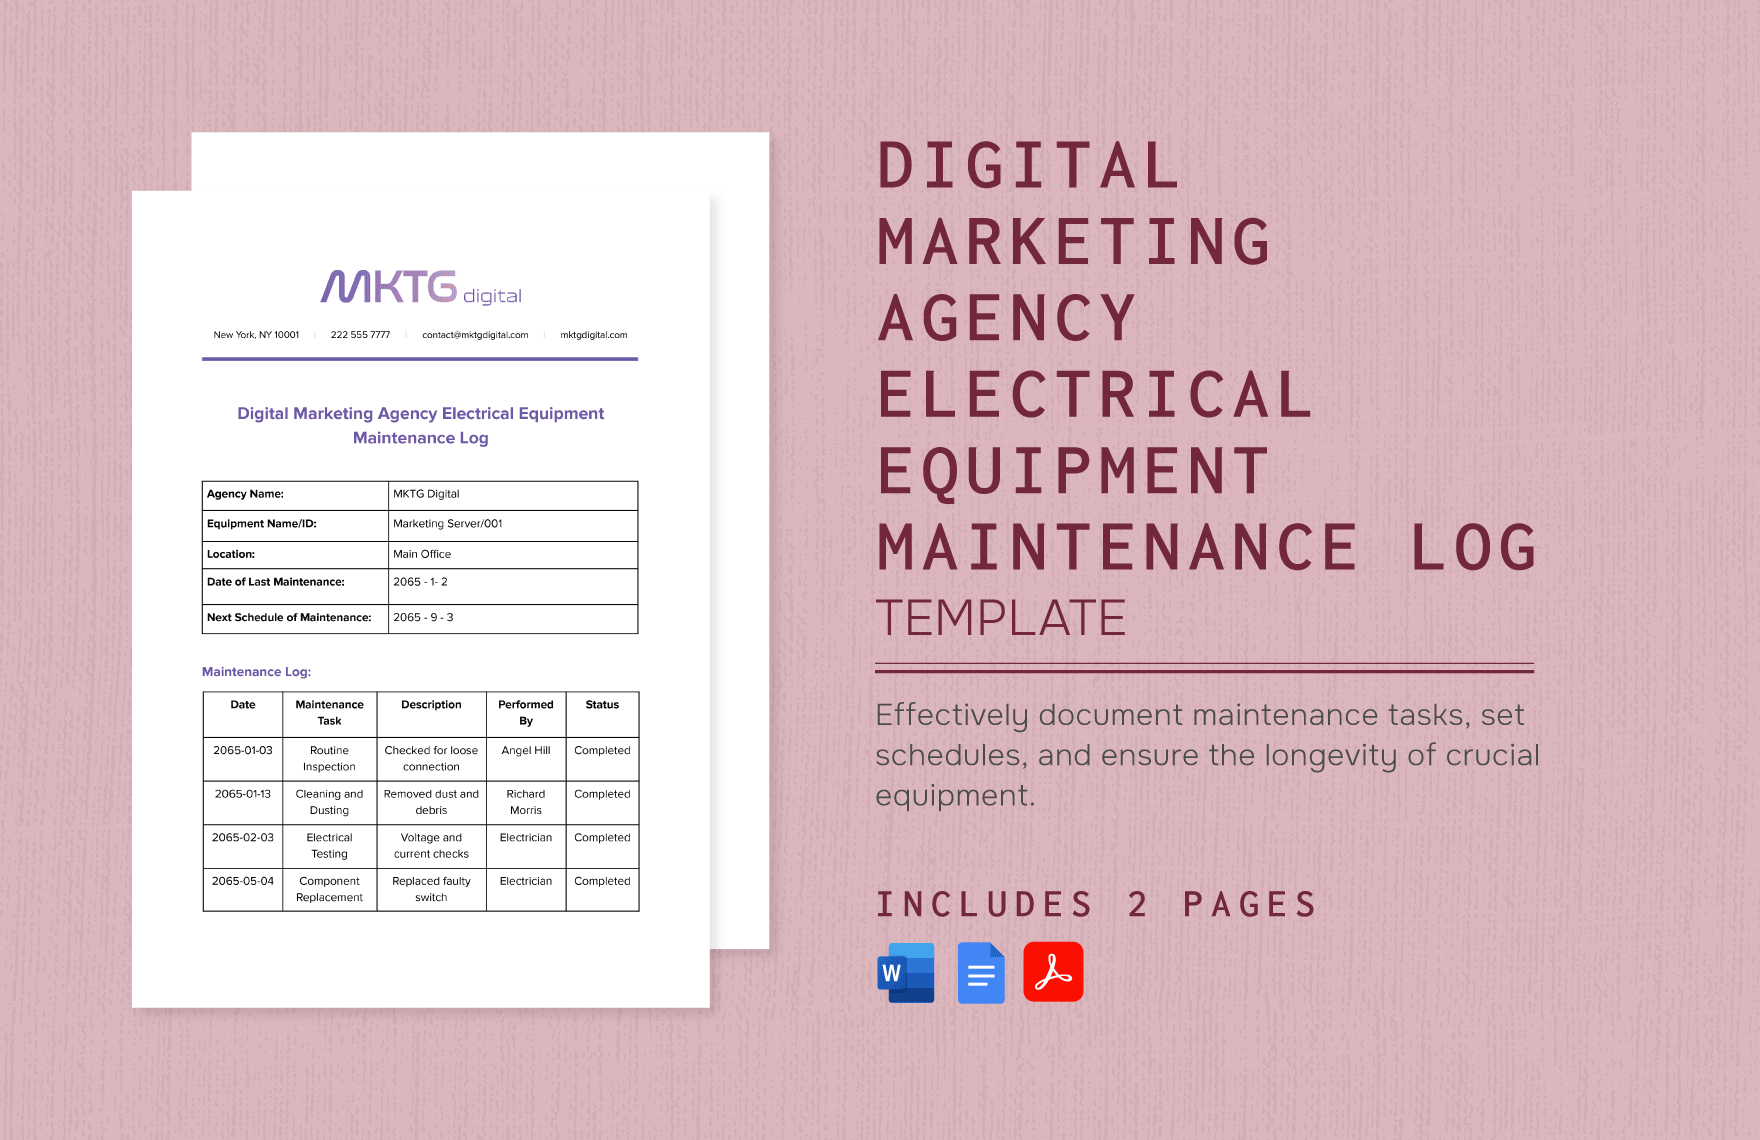 Digital Marketing Agency Electrical Equipment Maintenance Log Template in Word, Google Docs, PDF